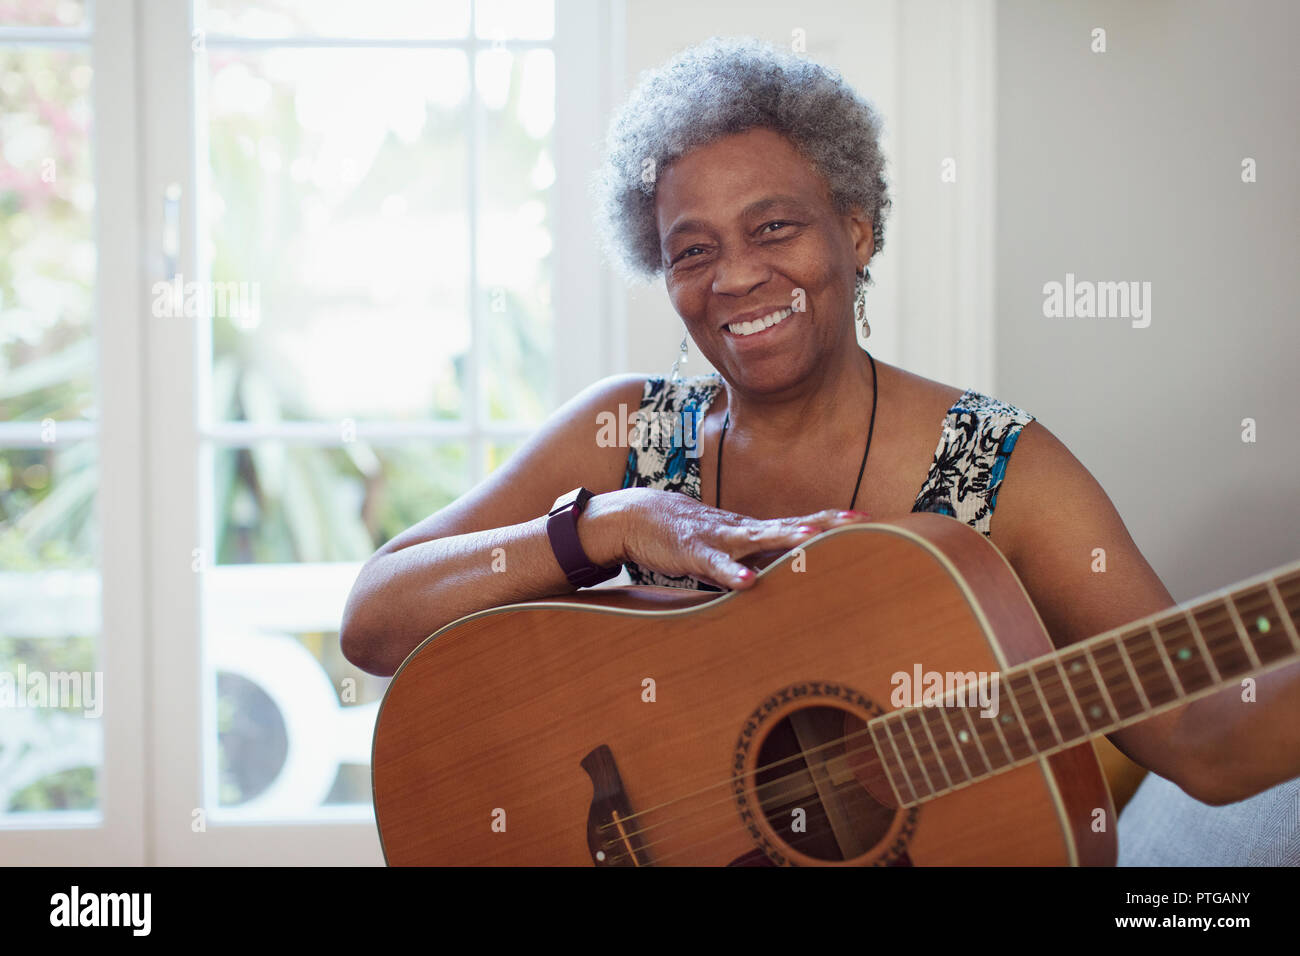 Portrait smiling, confident active senior woman playing guitar Stock Photo